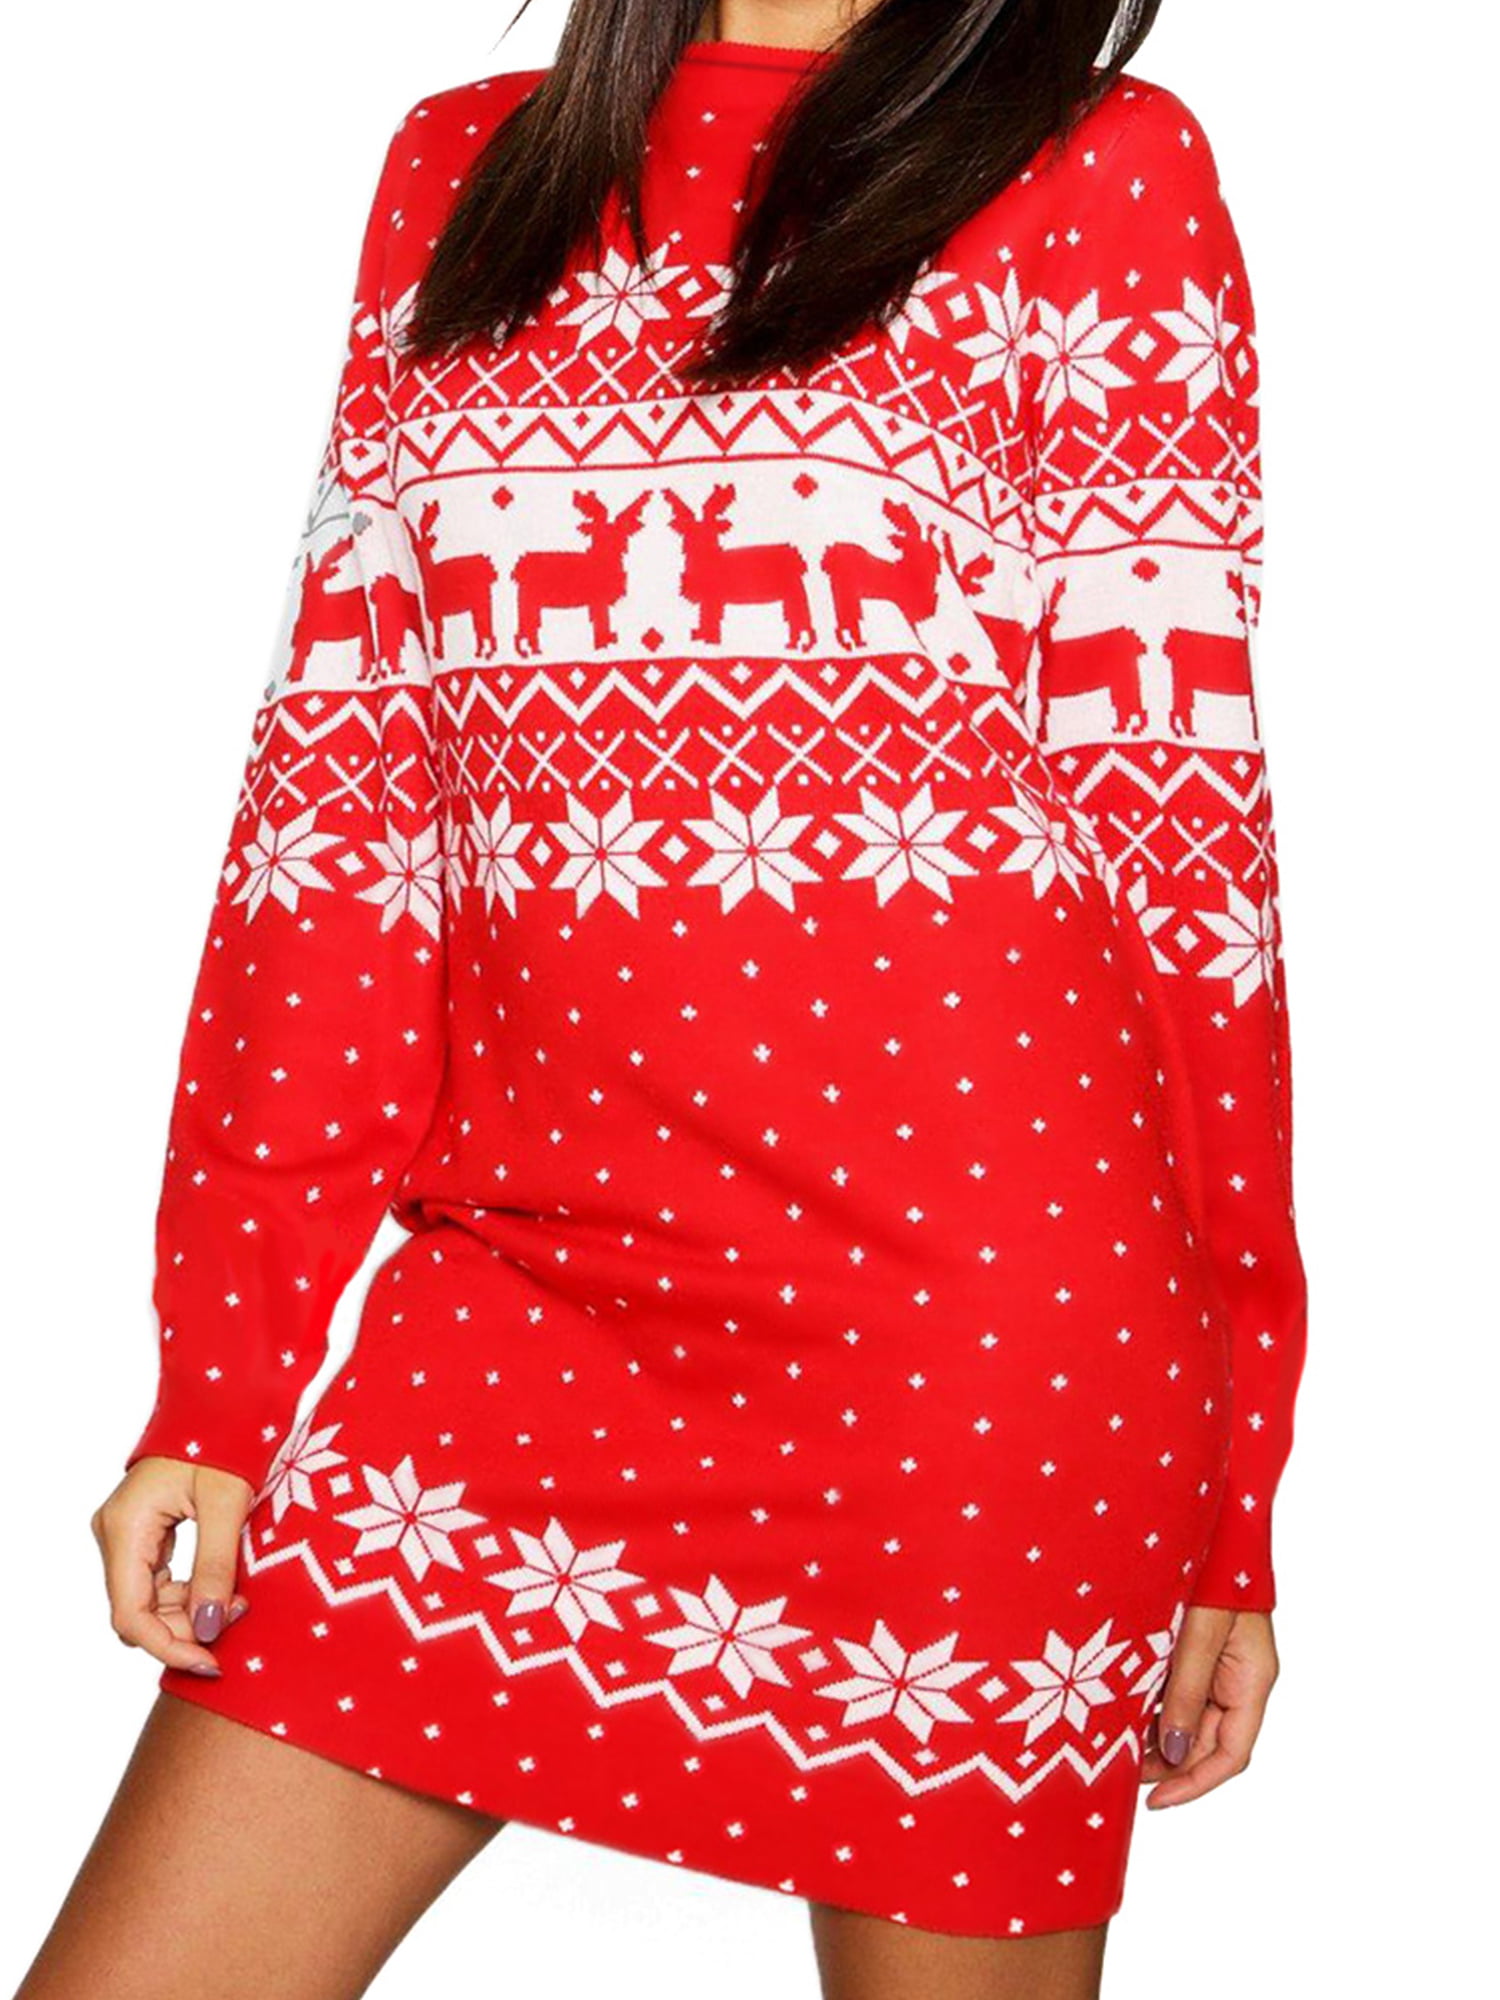 sheart 9 Womens Christmas Santa Claus Print Dresses Long Sleeve Crew Neck Flared Xmas Holiday A Line Dress 